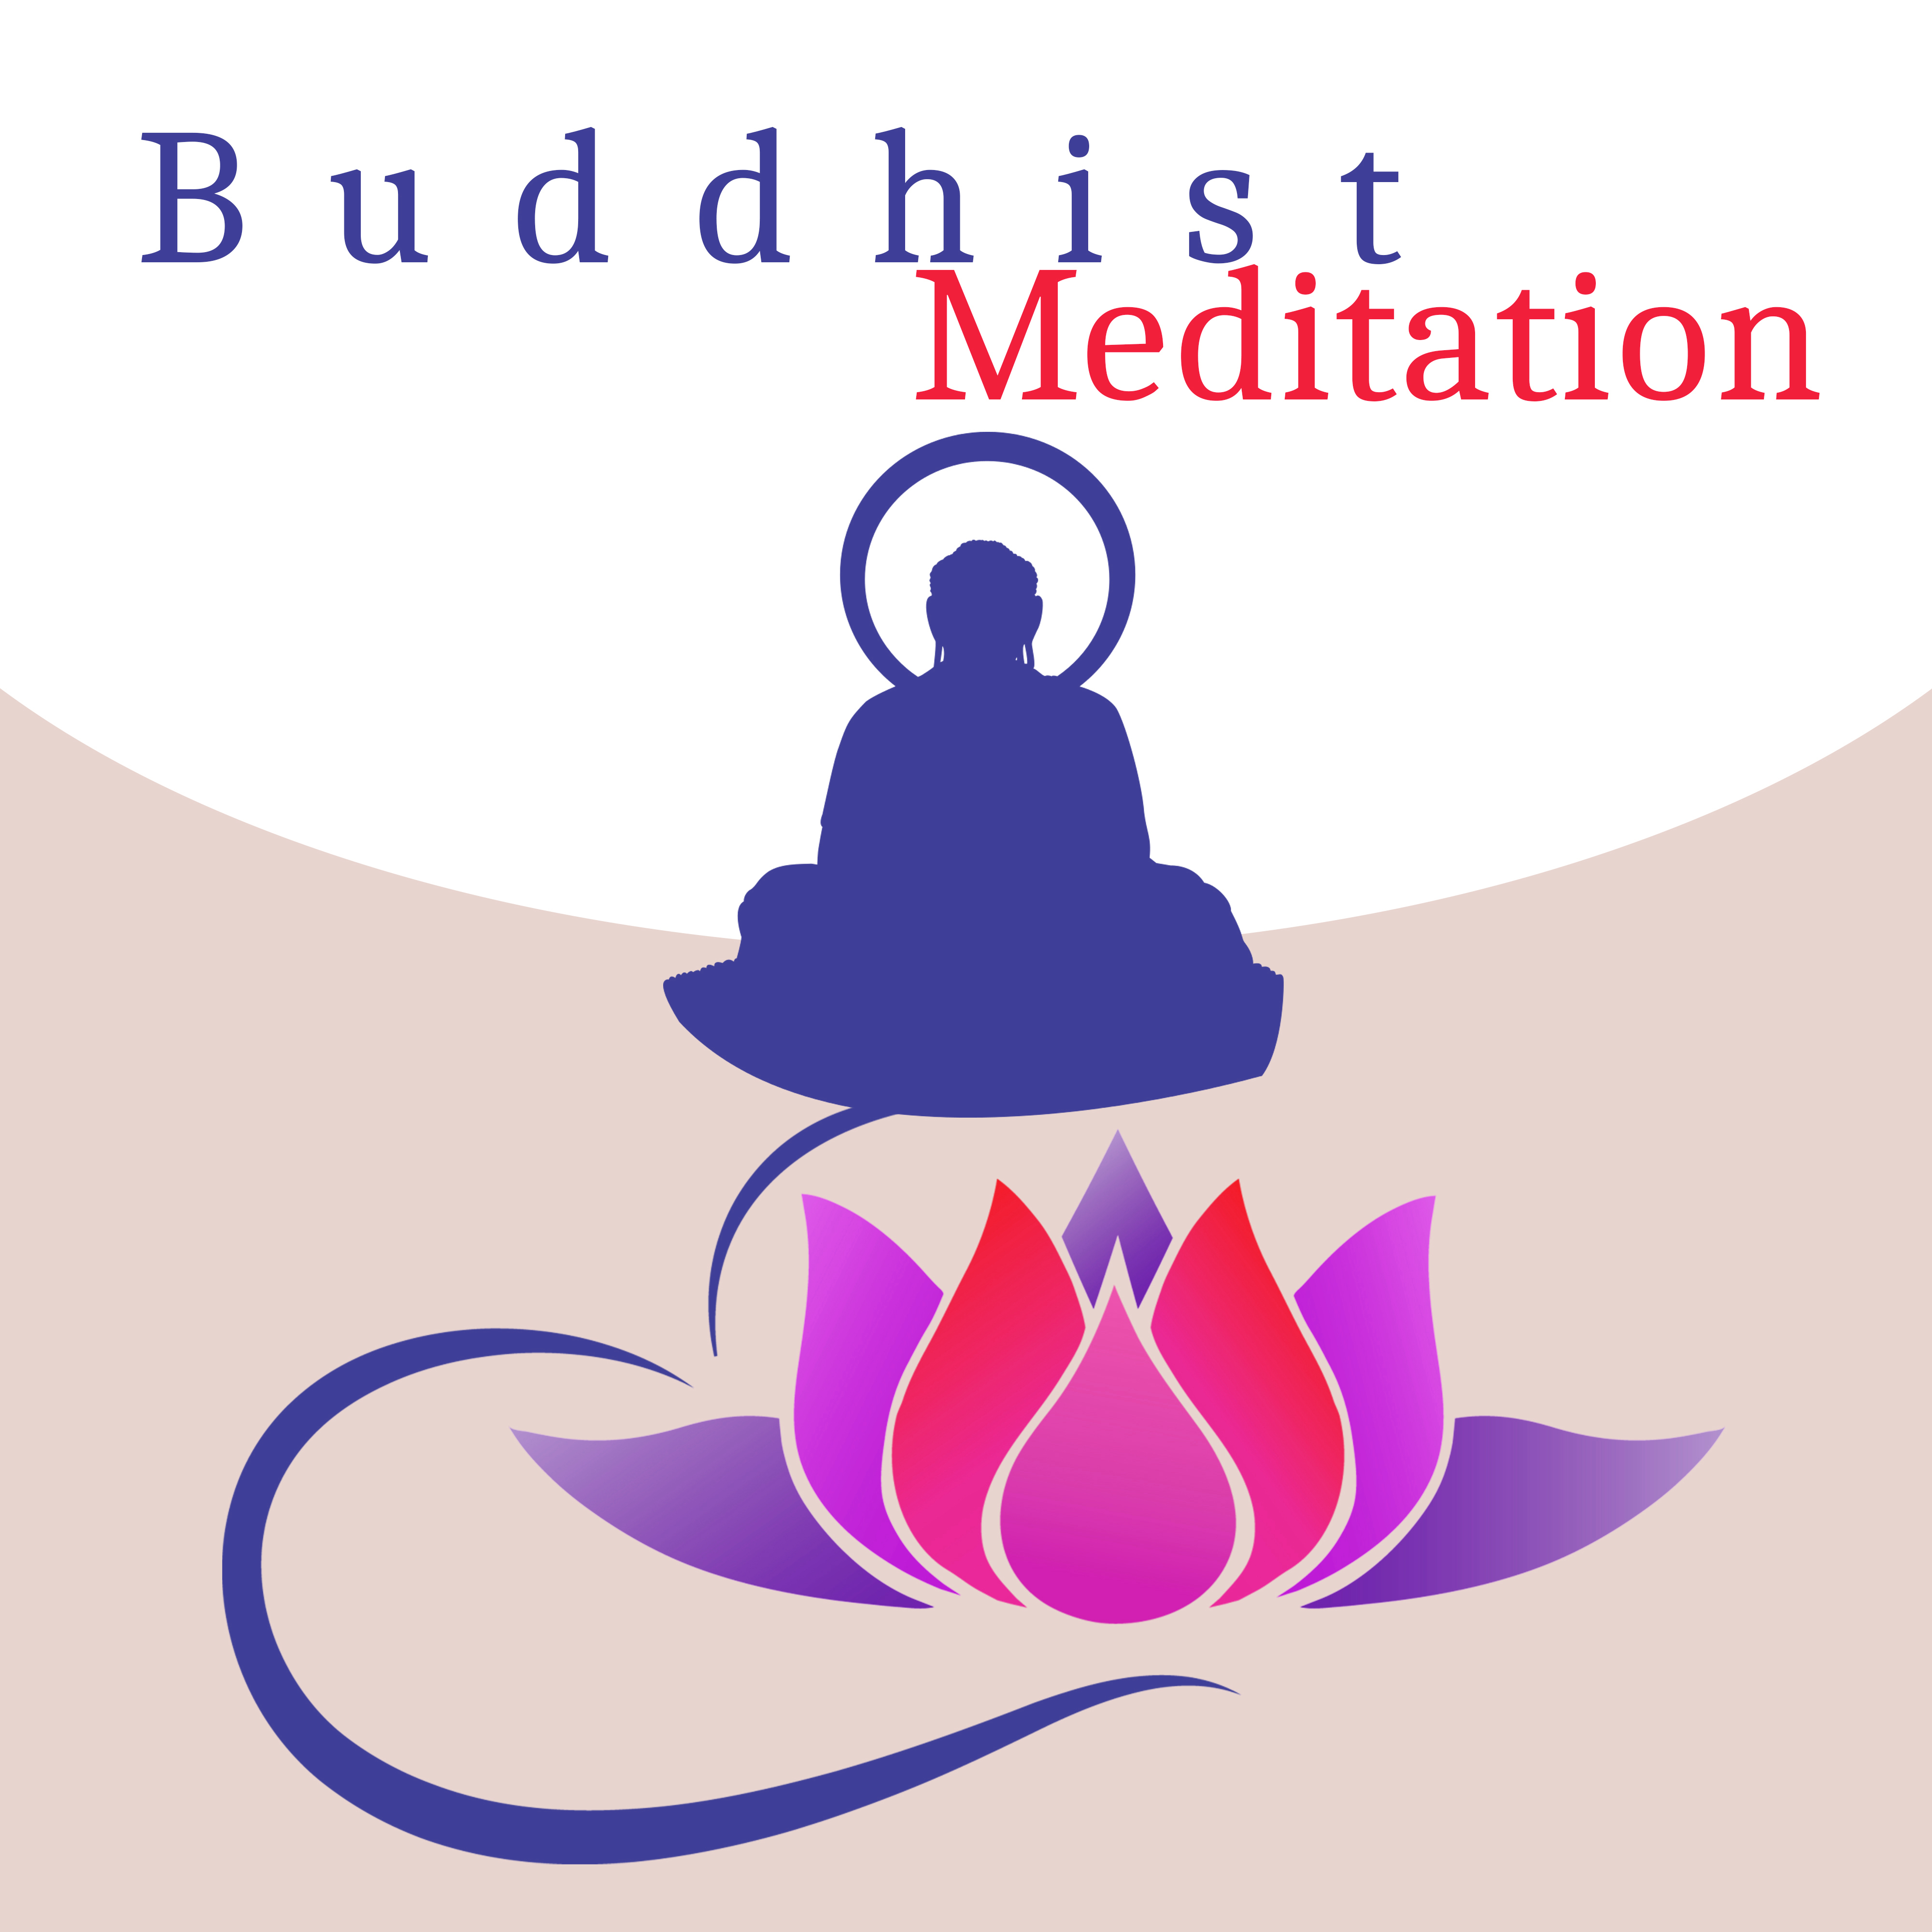 Buddhist Meditation  Relief, Training Yoga, Reiki, Zen, Tibetan Music, Peaceful Mind, Better Concentration